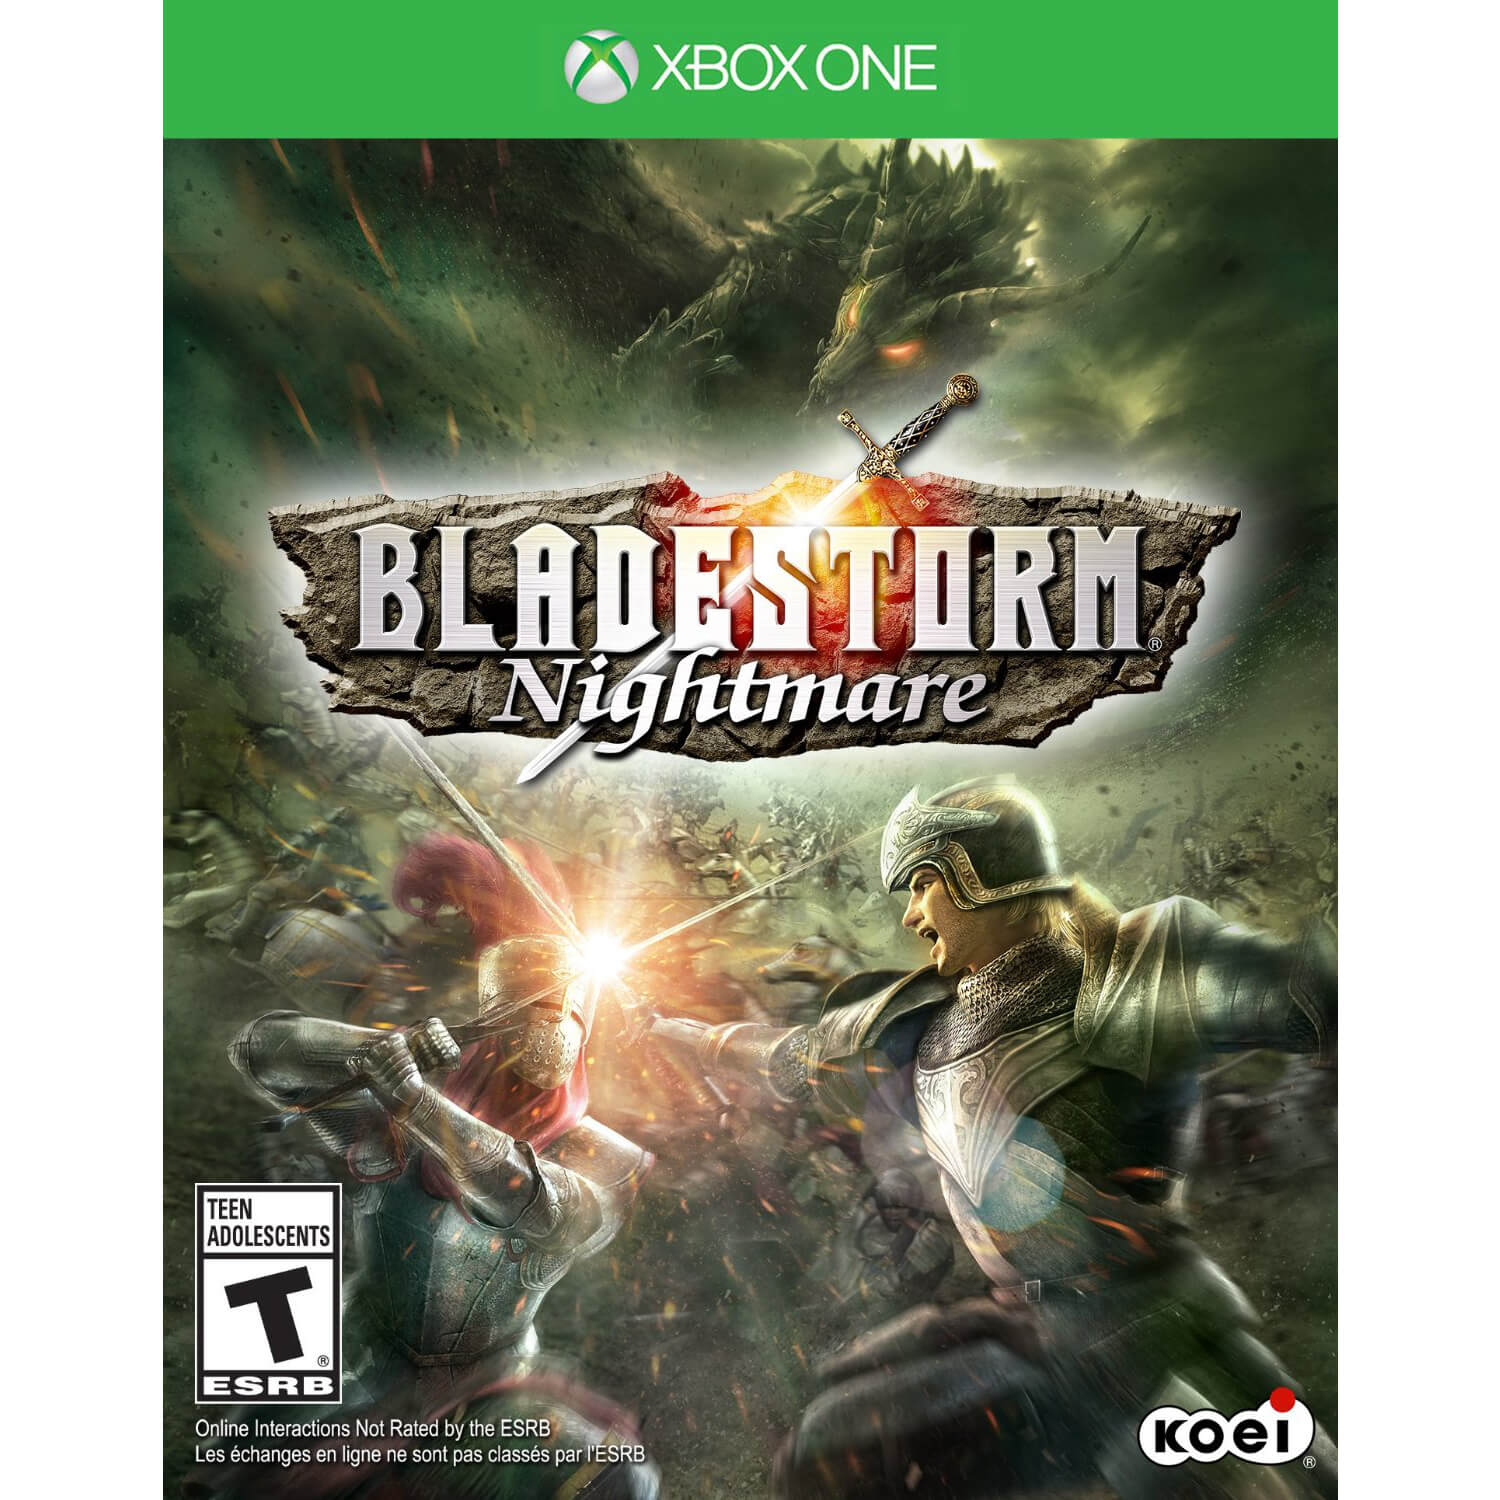  Joc Xbox One Bladestorm Nightmare 